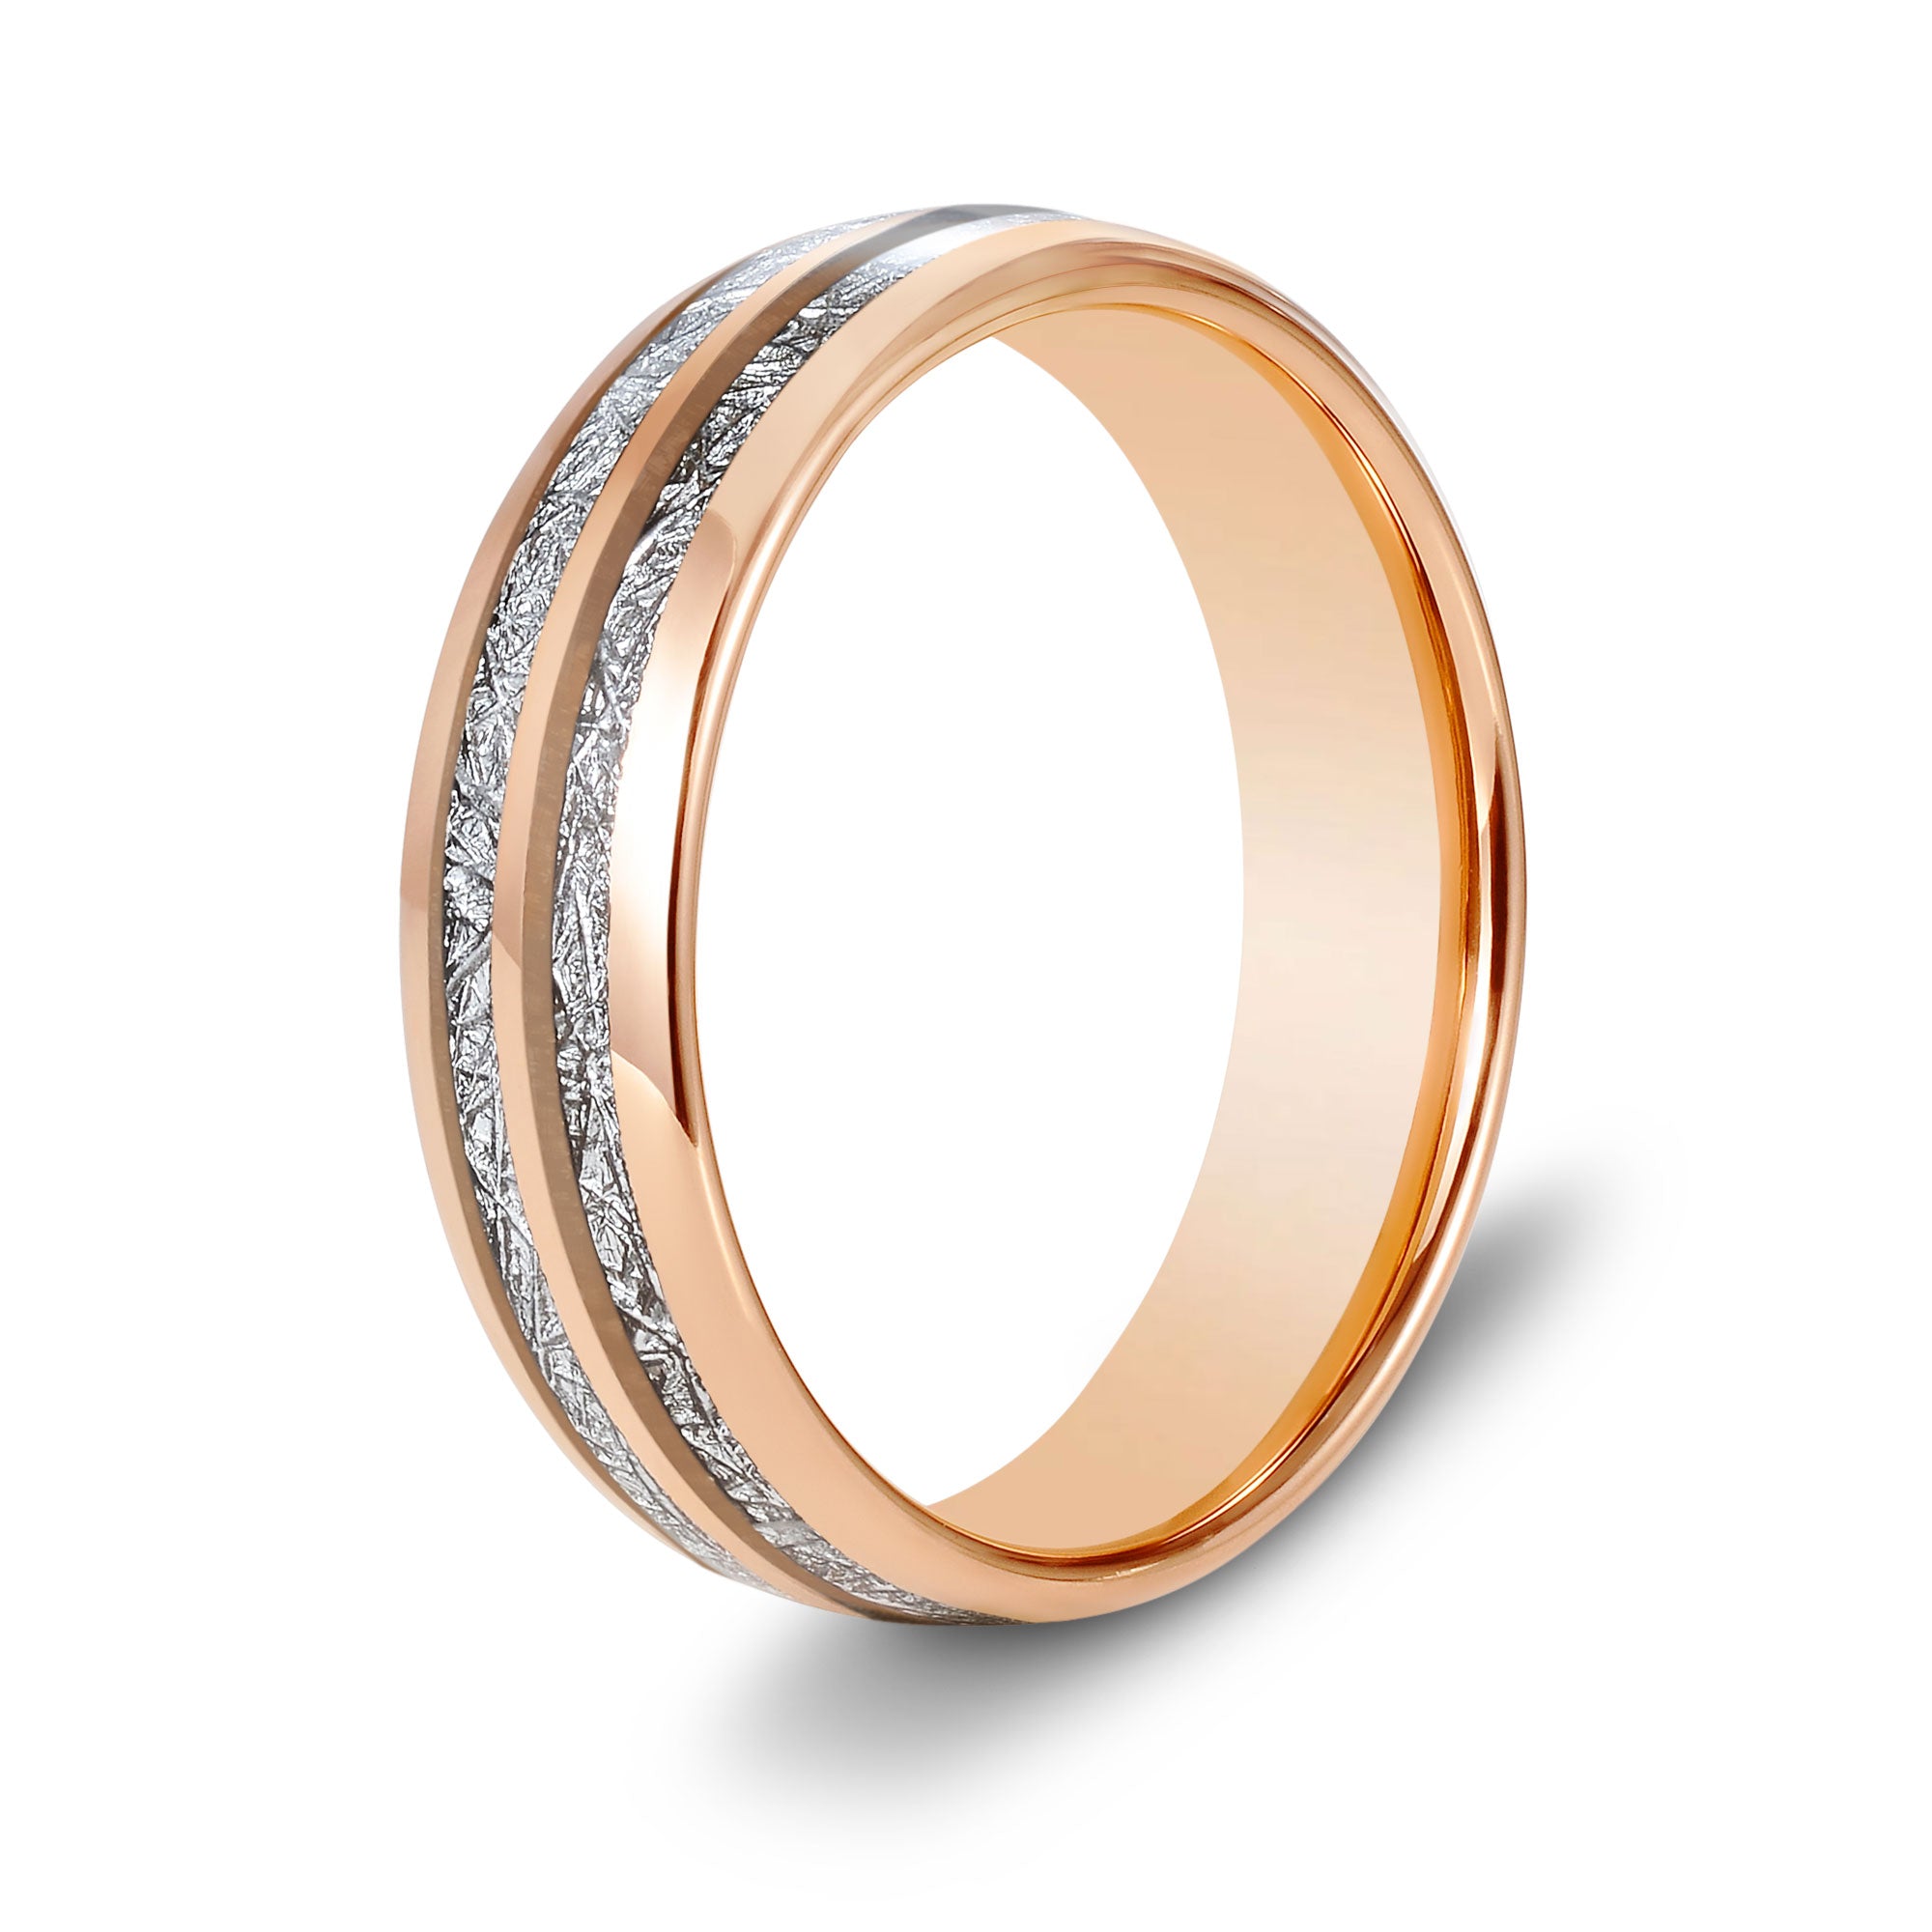 The Celebration - Rose Gold 6mm Meteorite Tungsten Ring